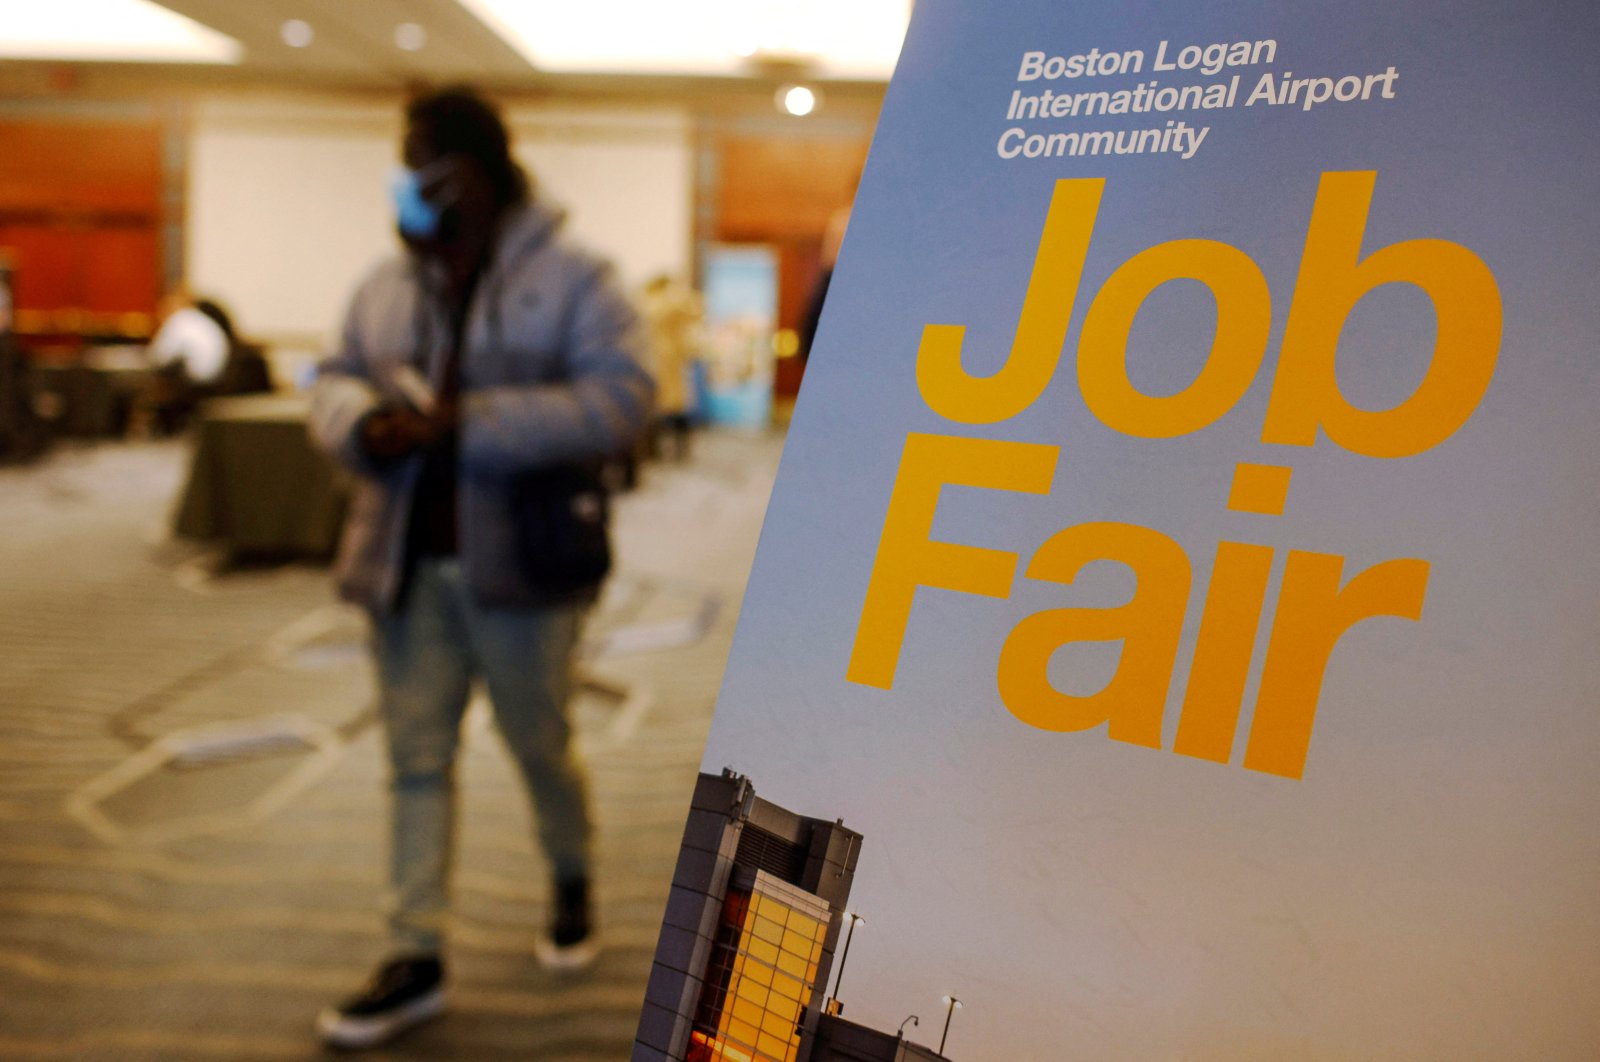 A job seeker leaves the job fair for airport-related employment at Logan International Airport in Boston, Massachusetts, U.S., Dec. 7, 2021. (Reuters Photo)